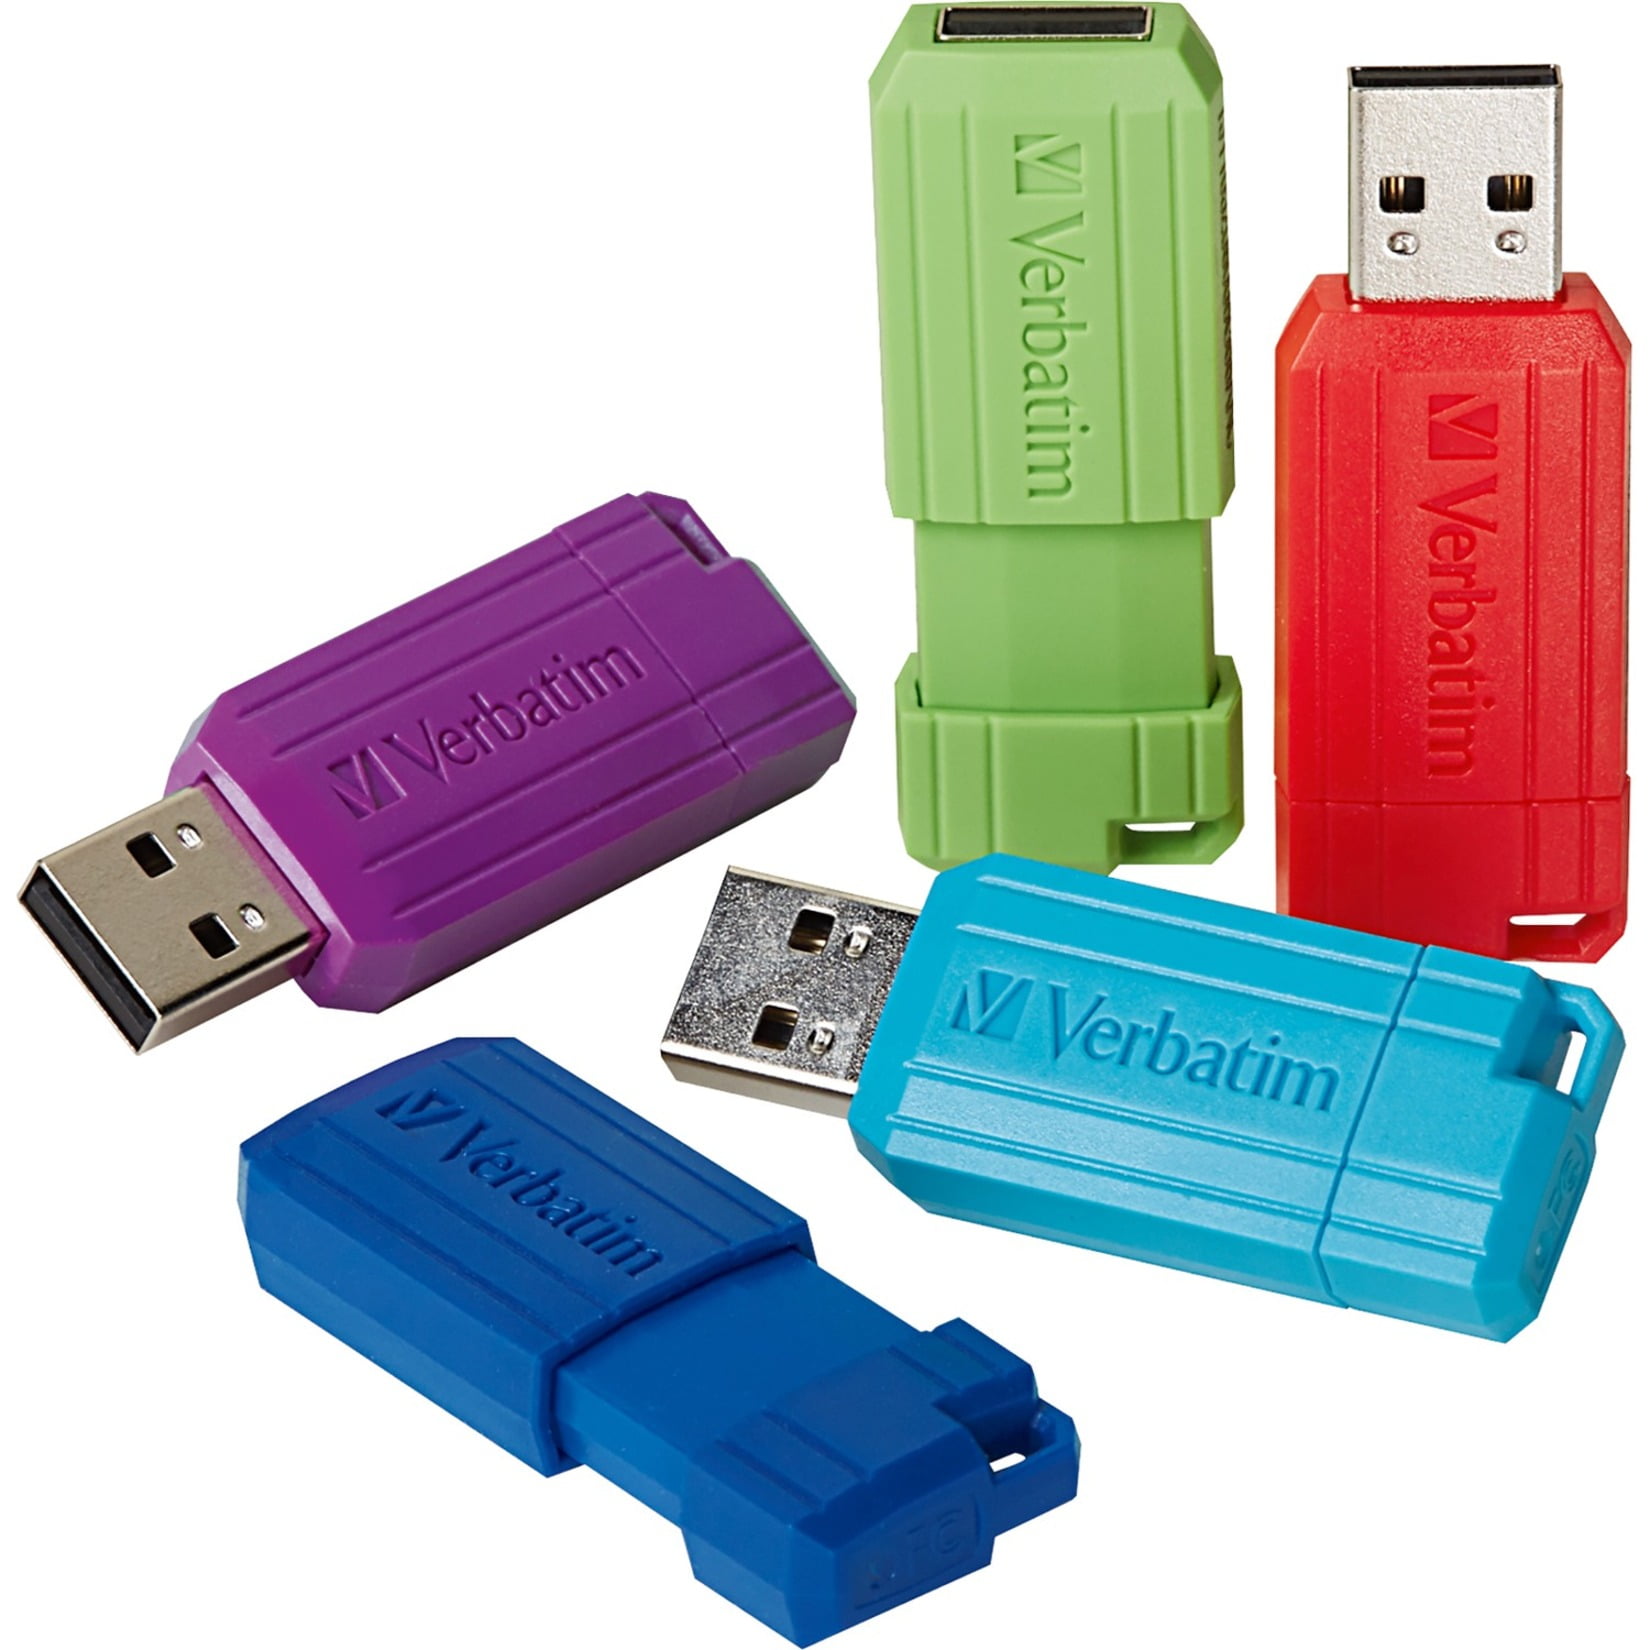 University of Washington-8GB 2.0 USB Flash Drive-Purple LXG Inc 